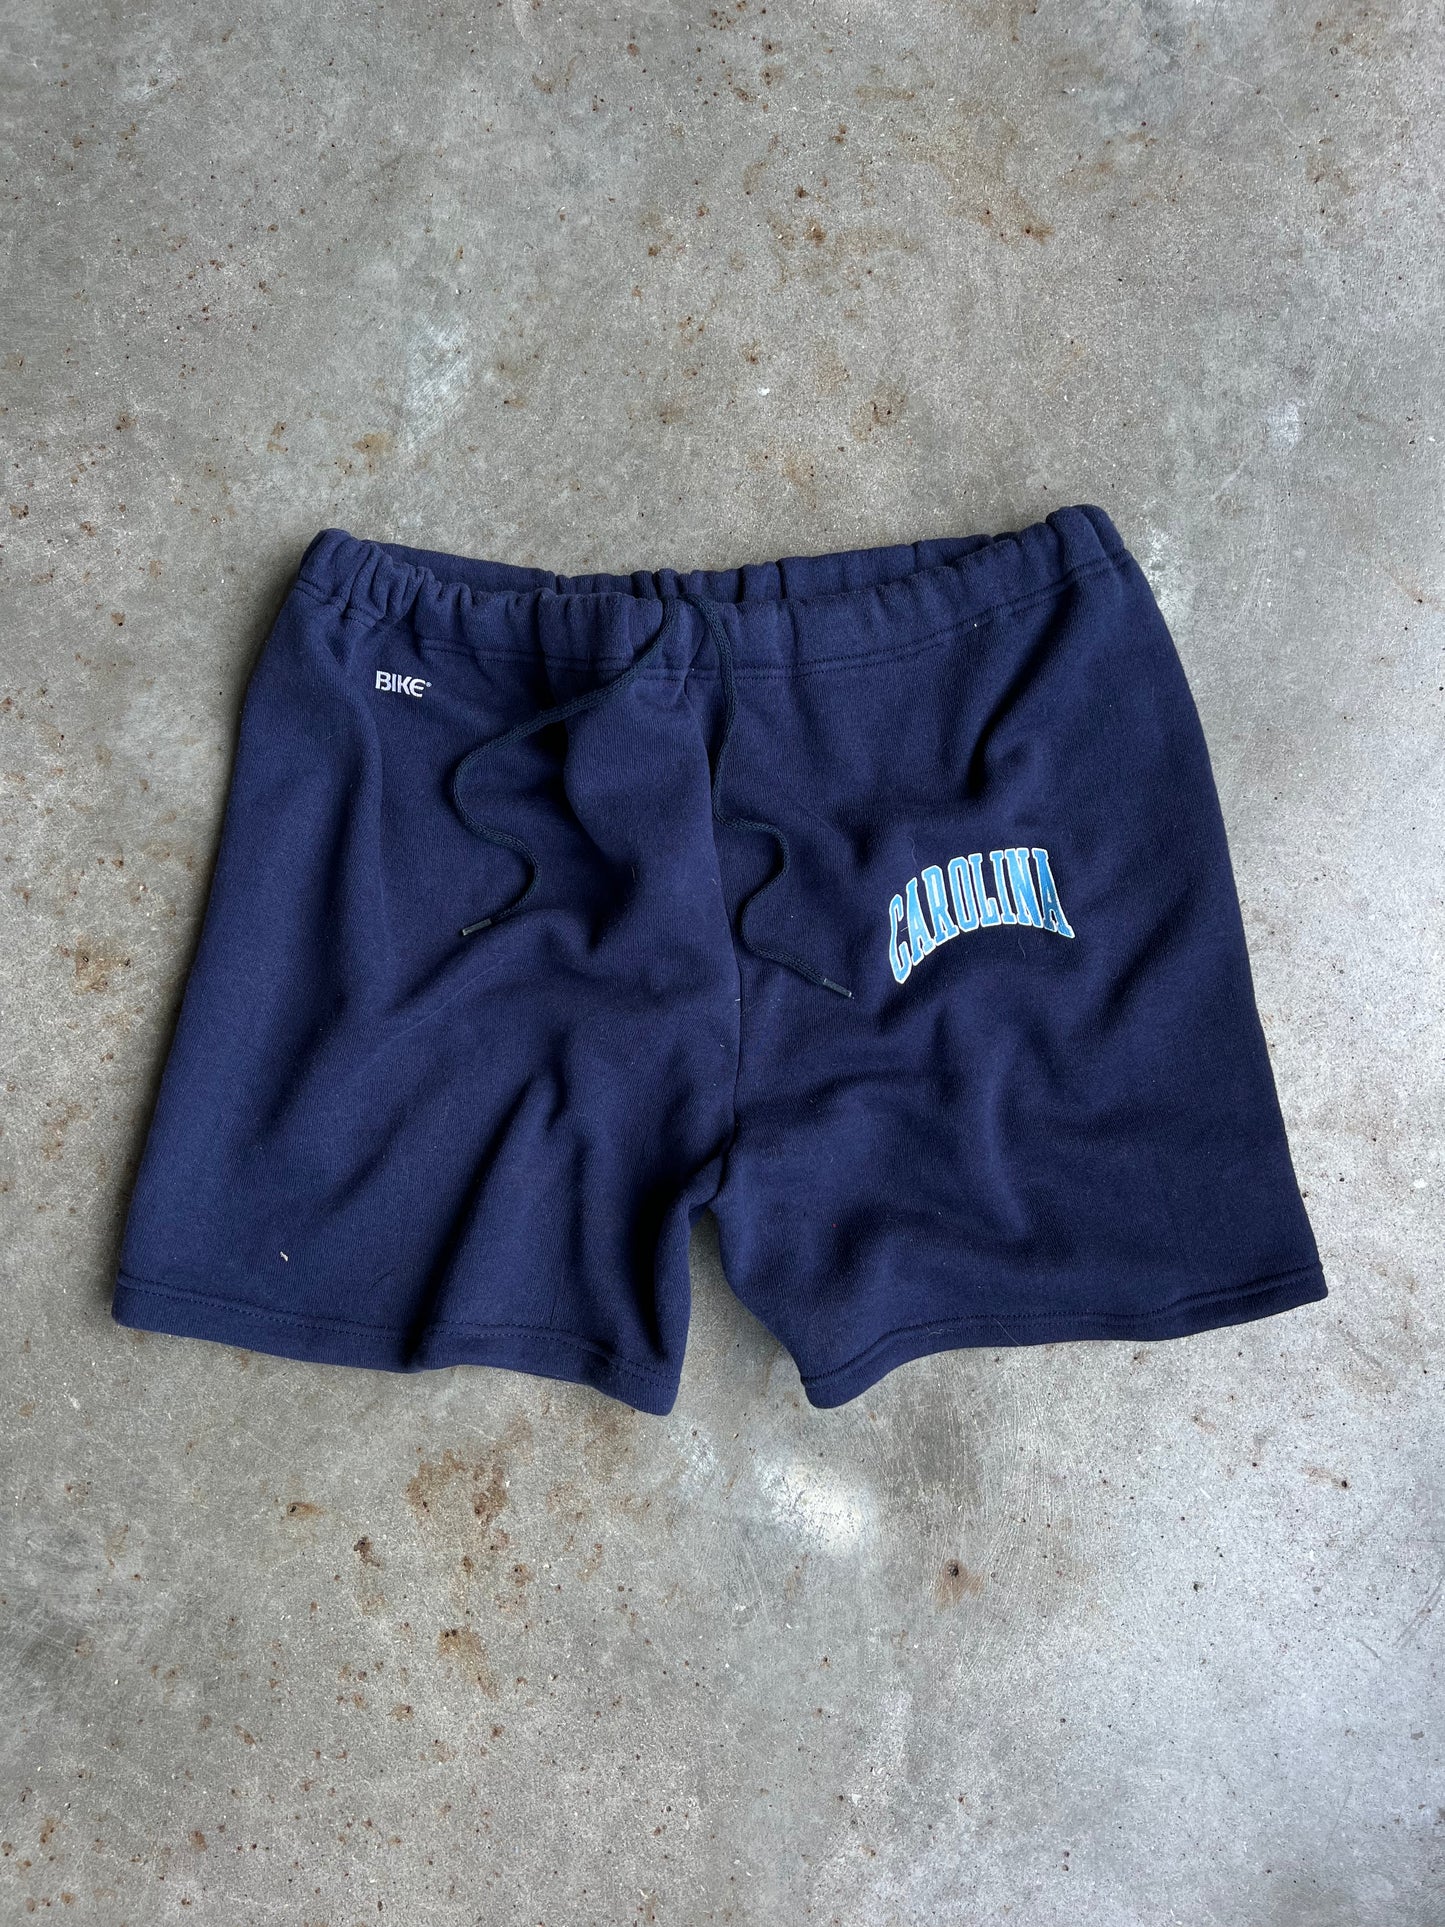 Vintage North Carolina Shorts - XL